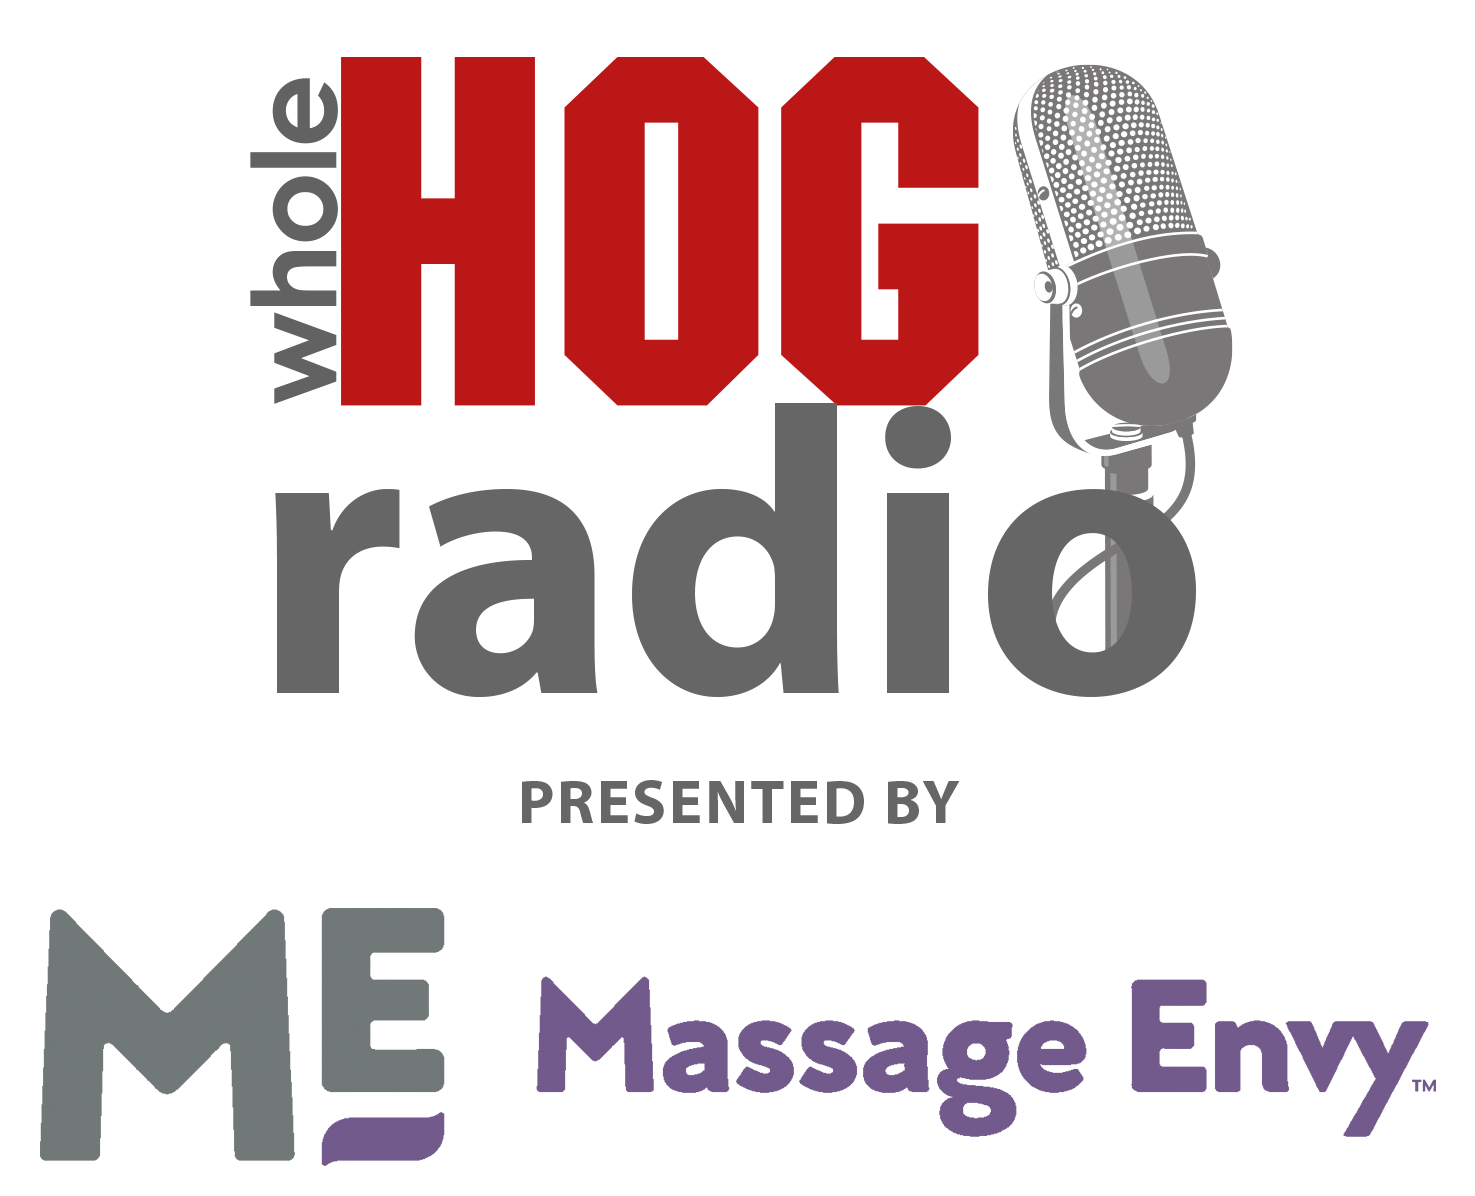 WholeHog Baseball Podcast: Hogs sweep Mississippi State; Auburn up next